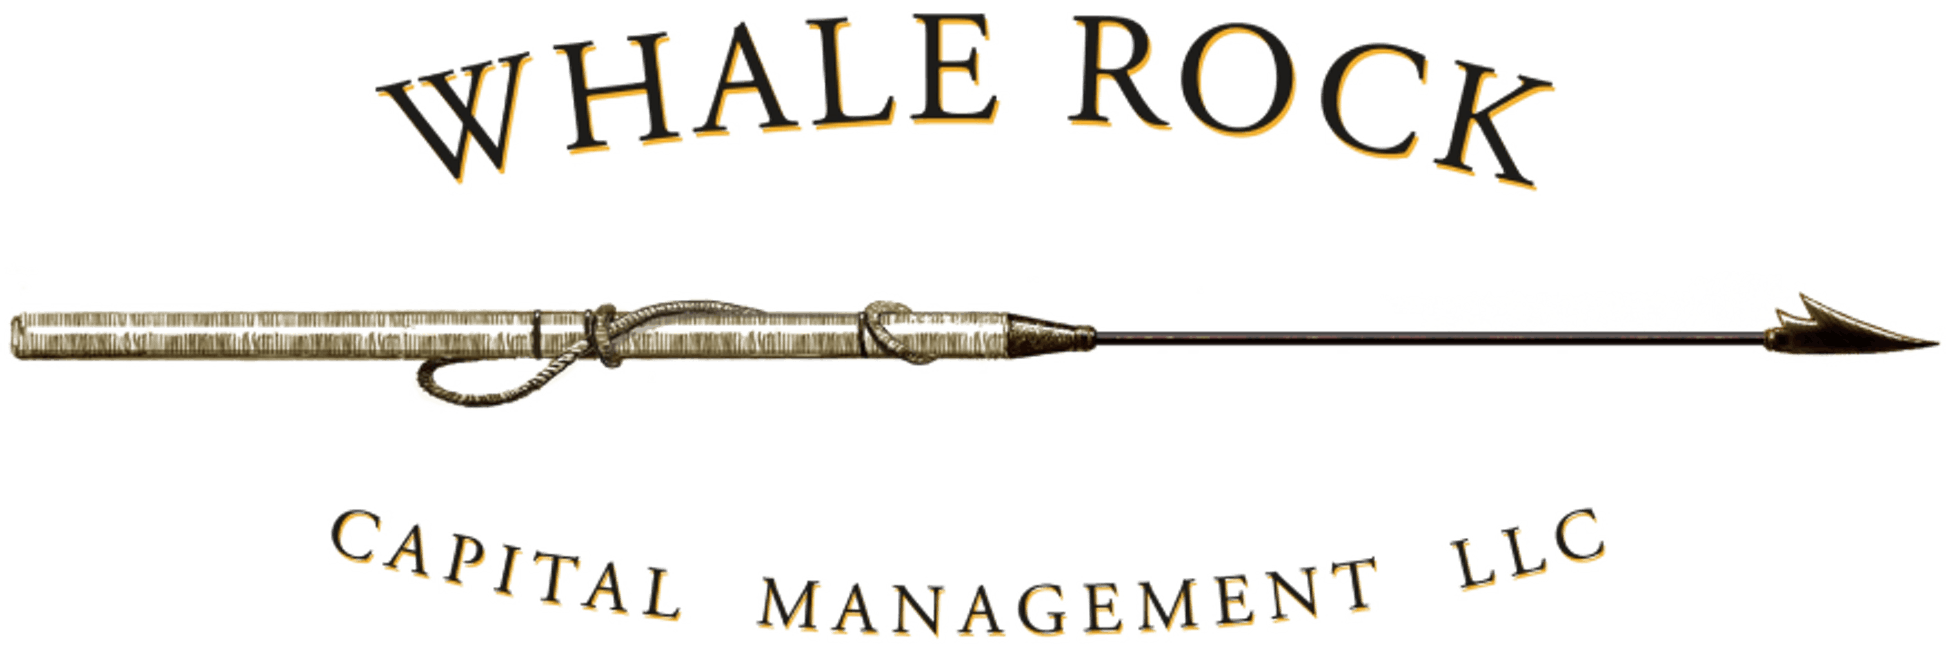 Whale rock capital management logo